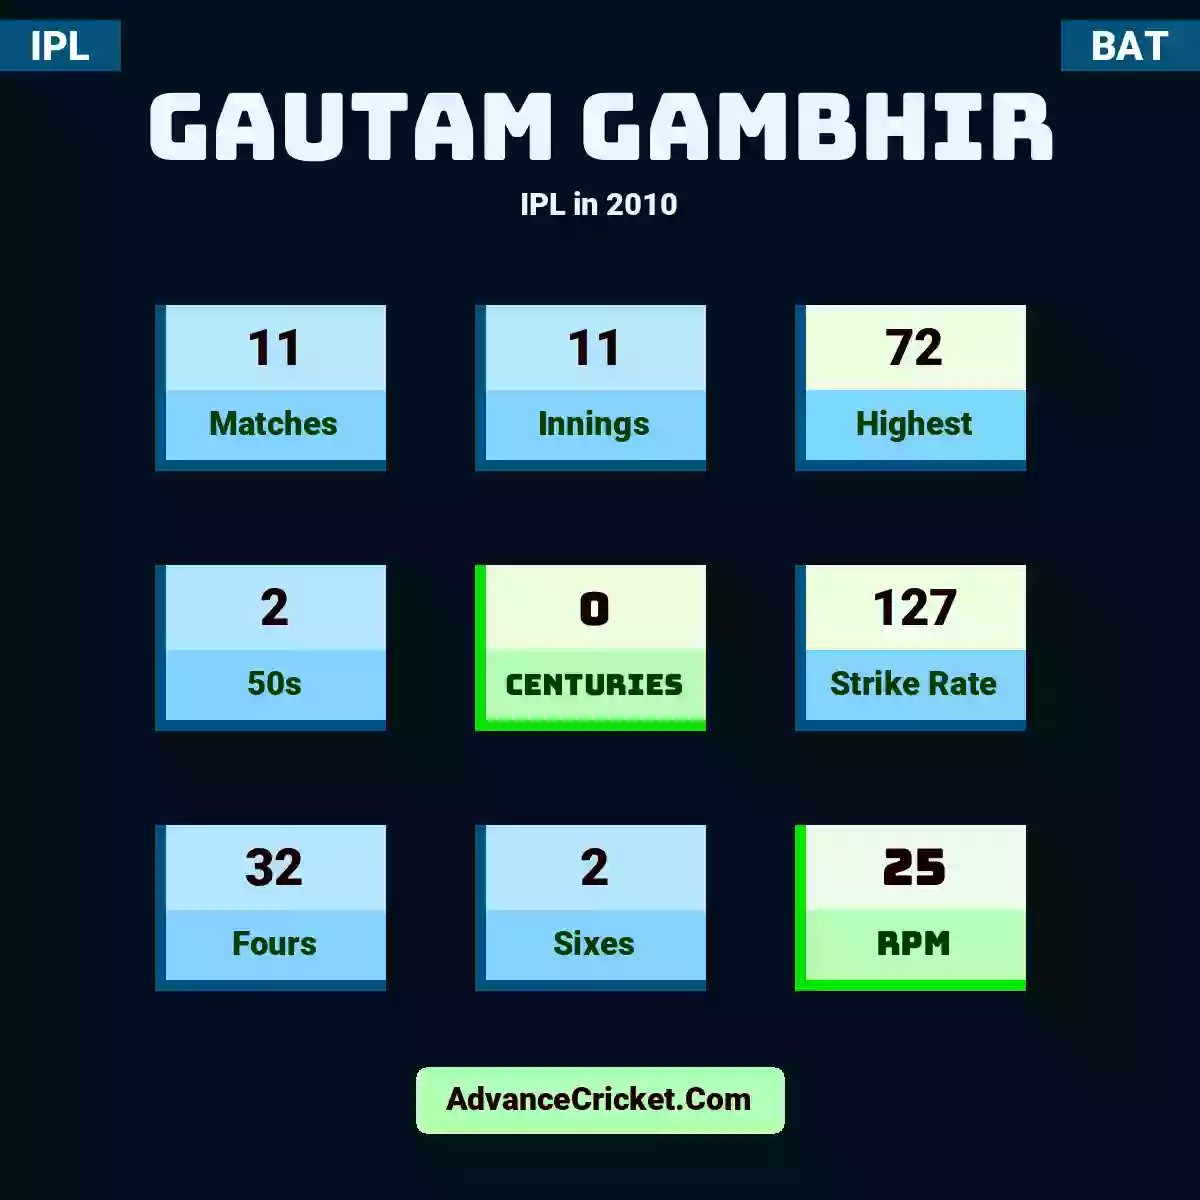 Gautam Gambhir IPL  in 2010, Gautam Gambhir played 11 matches, scored 72 runs as highest, 2 half-centuries, and 0 centuries, with a strike rate of 127. G.Gambhir hit 32 fours and 2 sixes, with an RPM of 25.